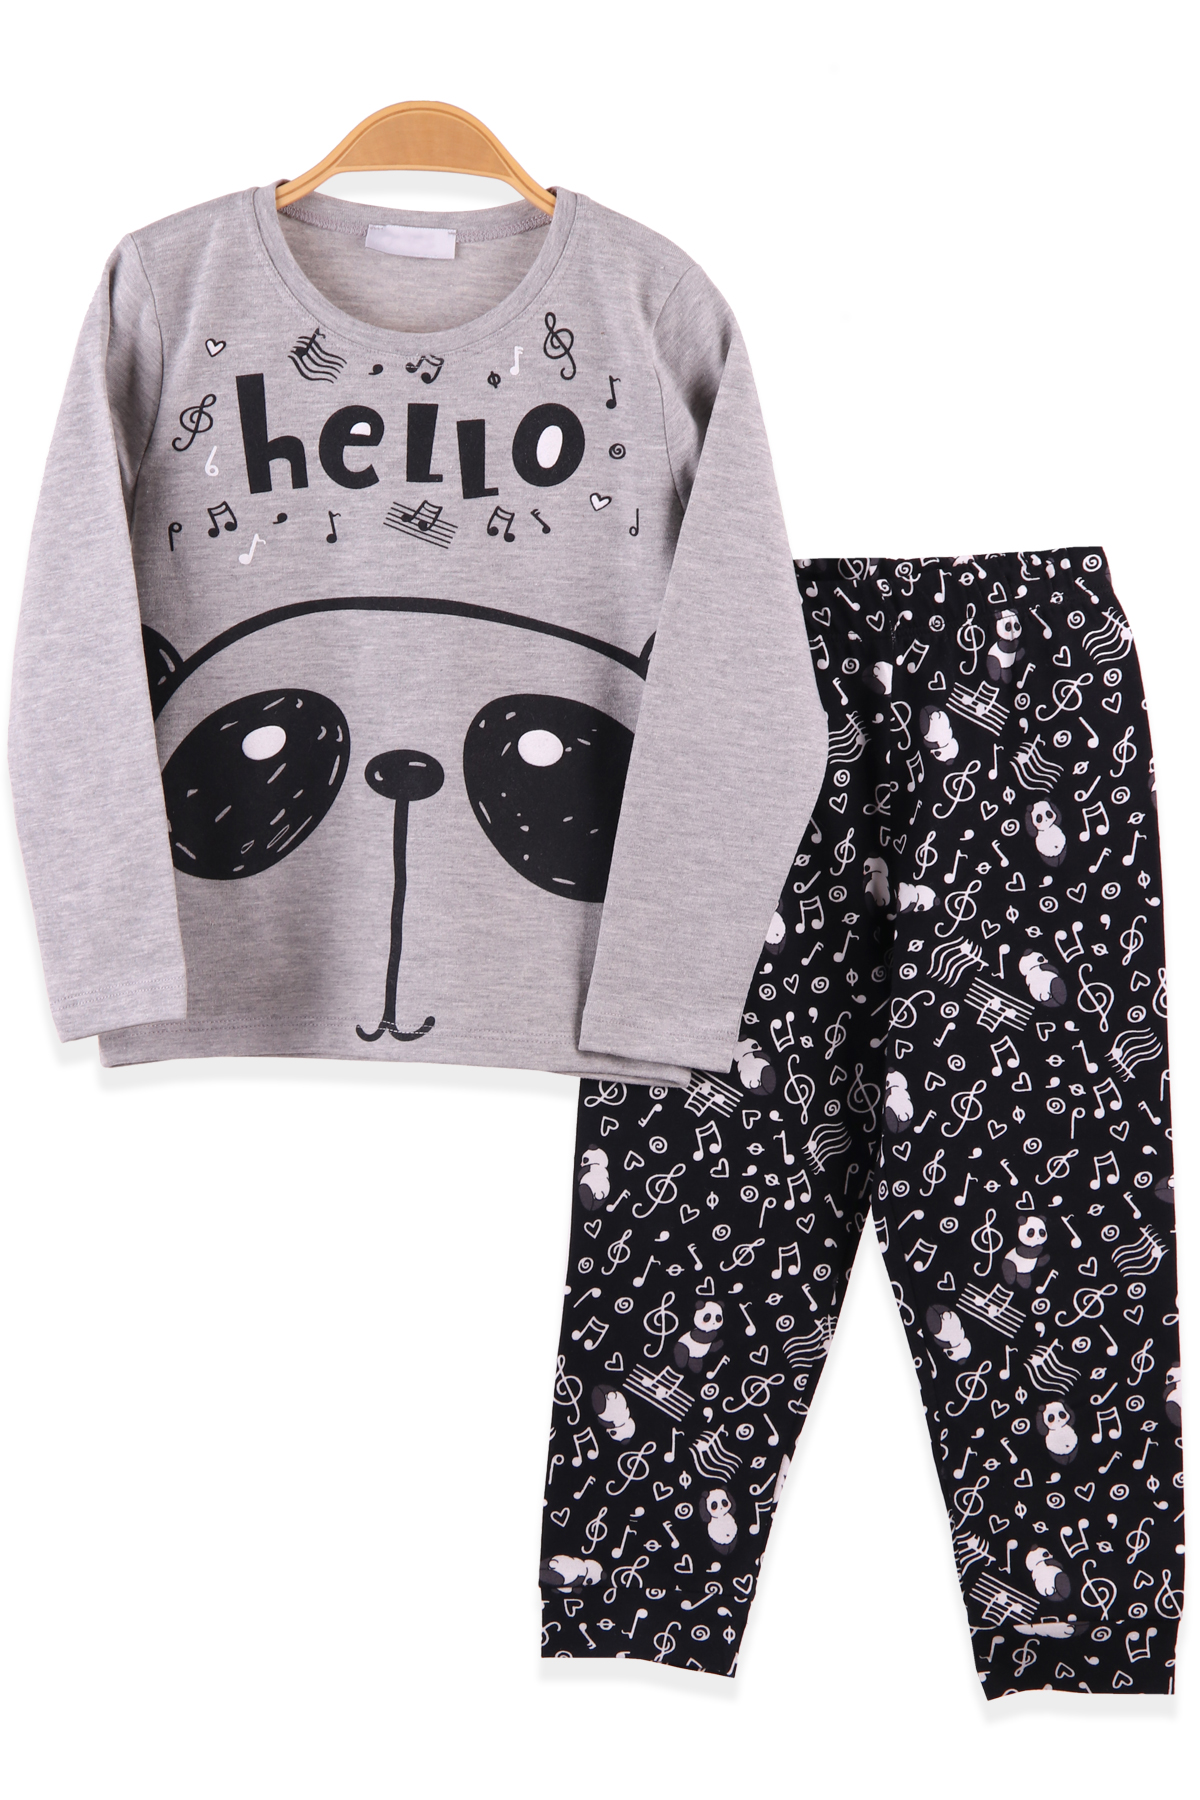 Kız Çocuk Pijama Takımı Pandalı Gri 3-6 Yaş - Breeze